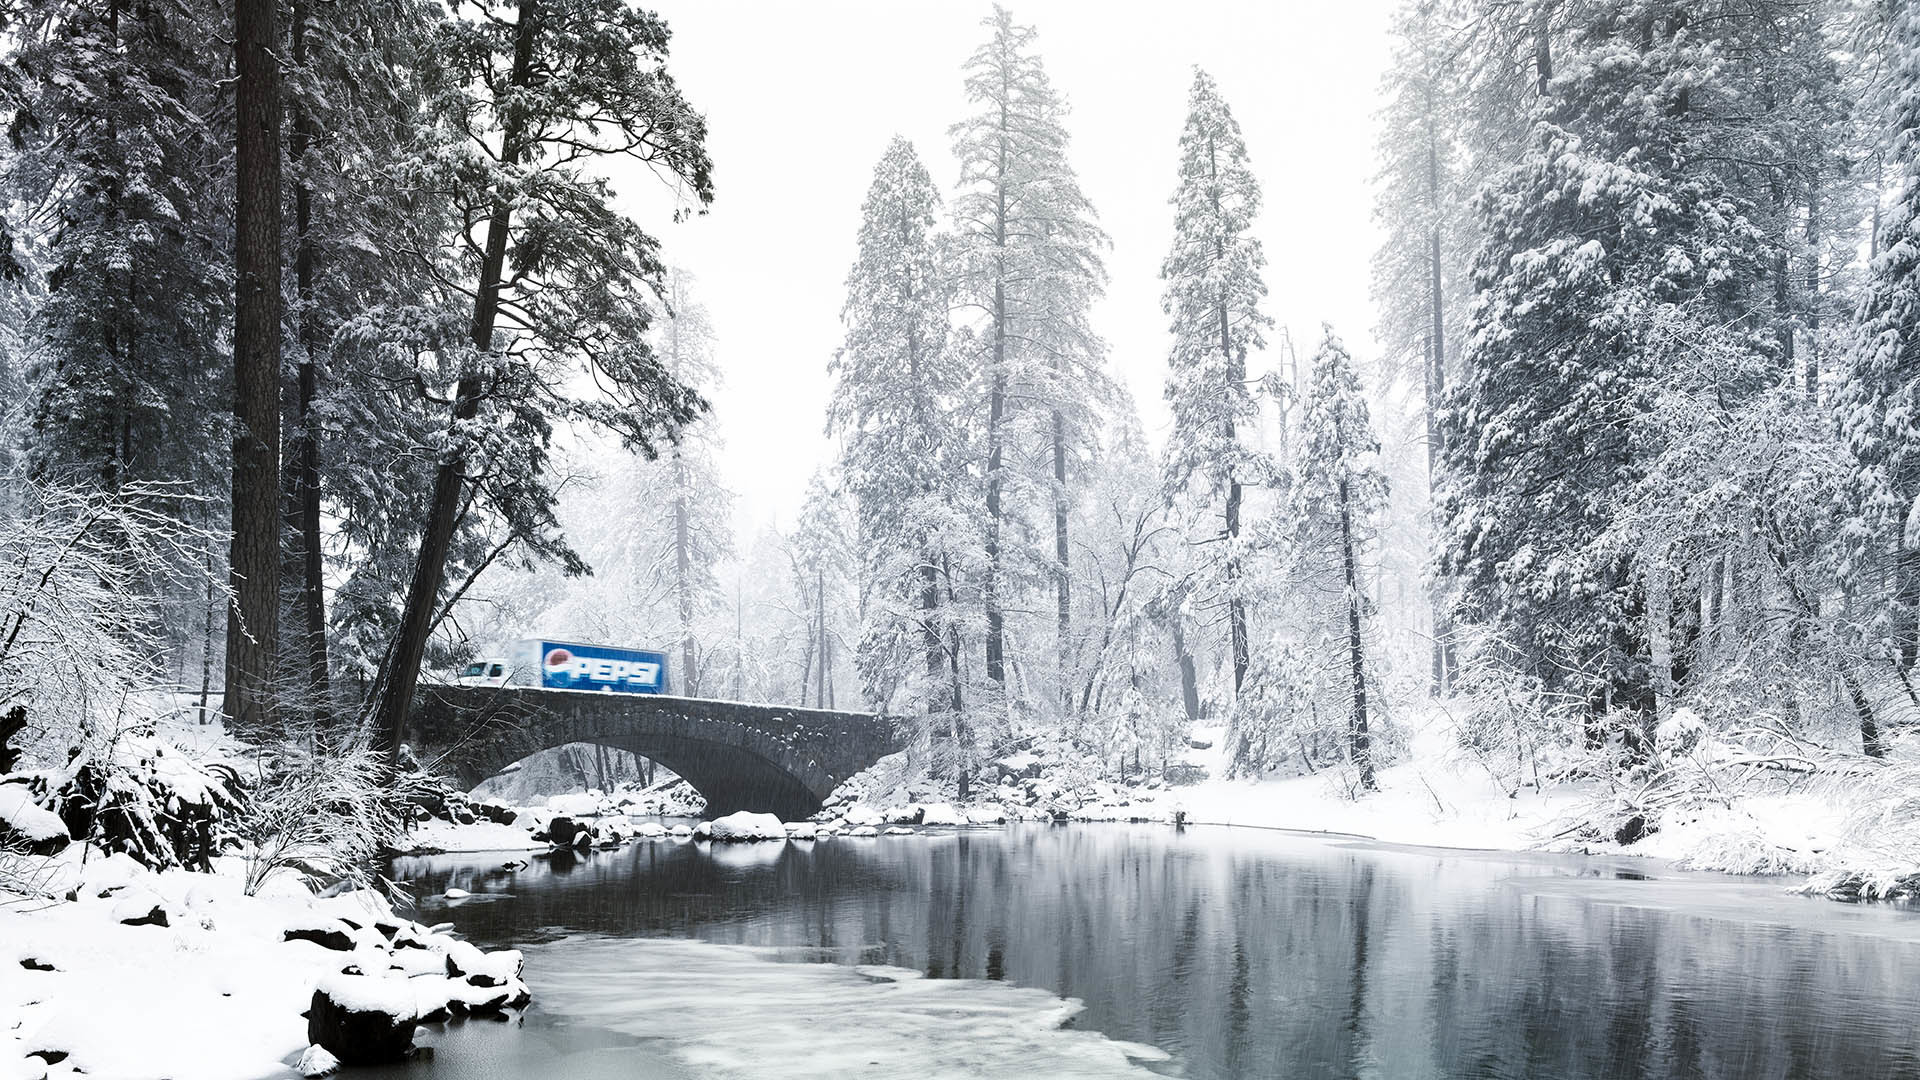 Stone bridge over frozen river in white snowy forest